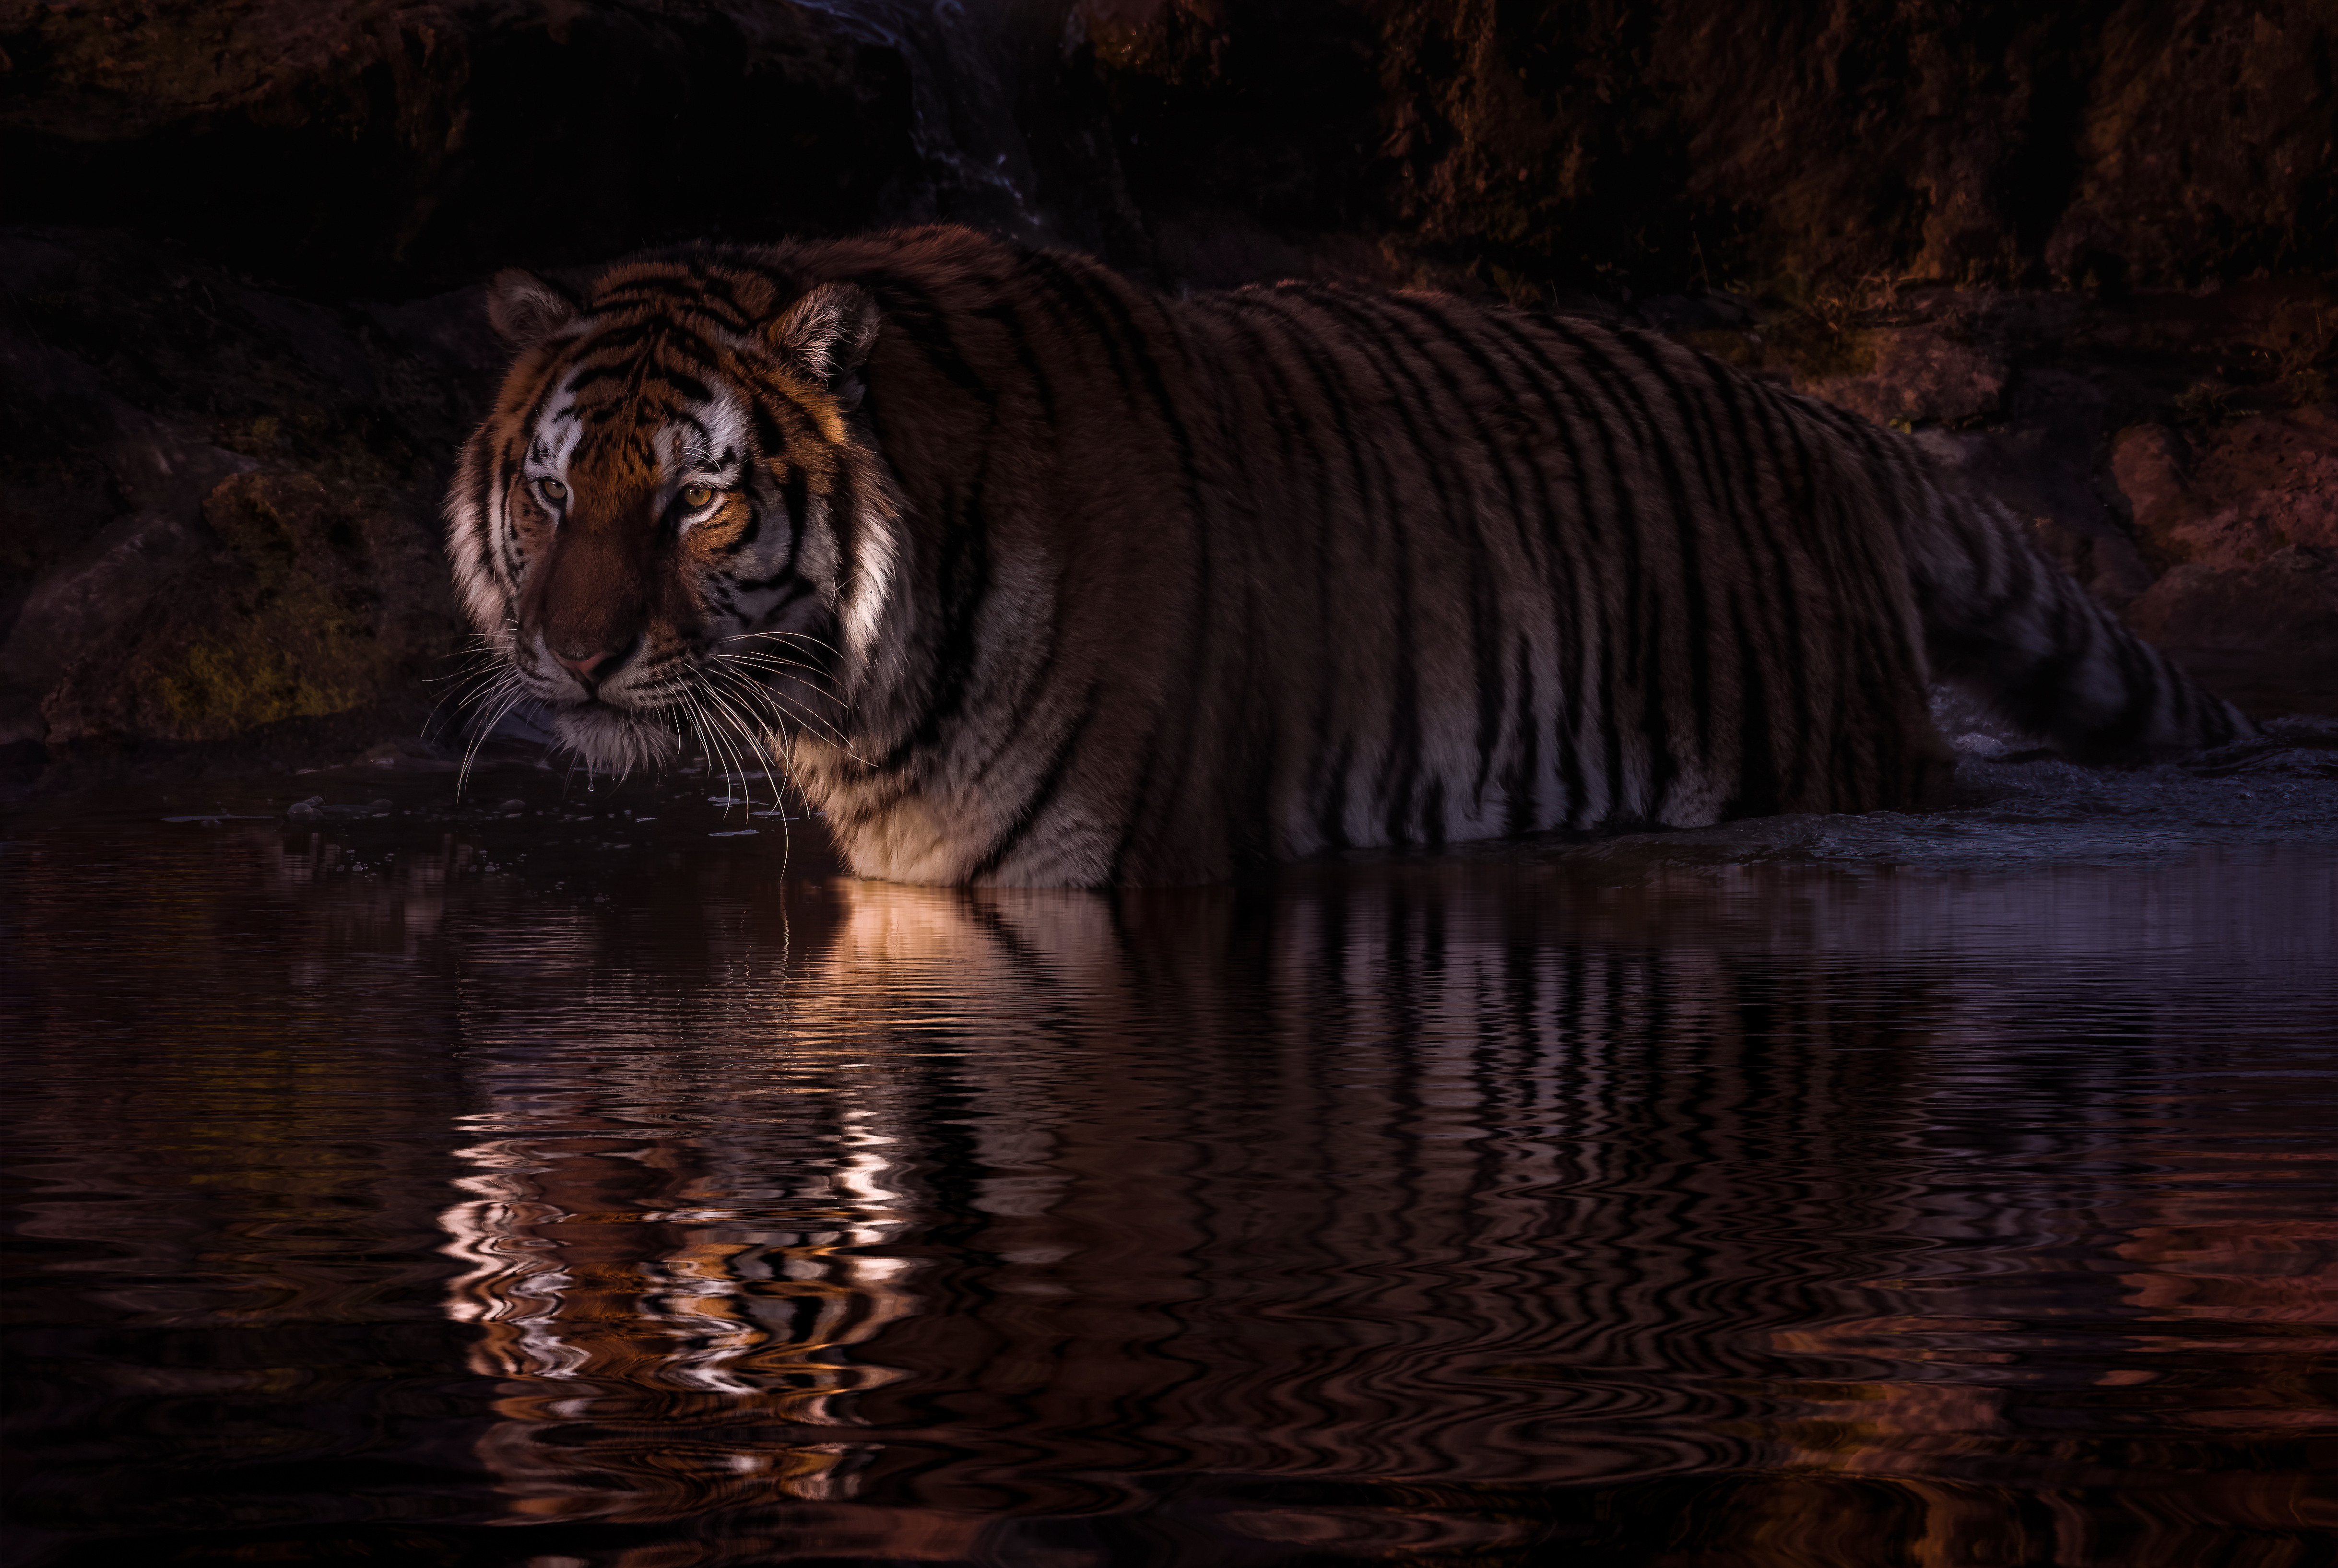 Wallpapers night tiger pond on the desktop